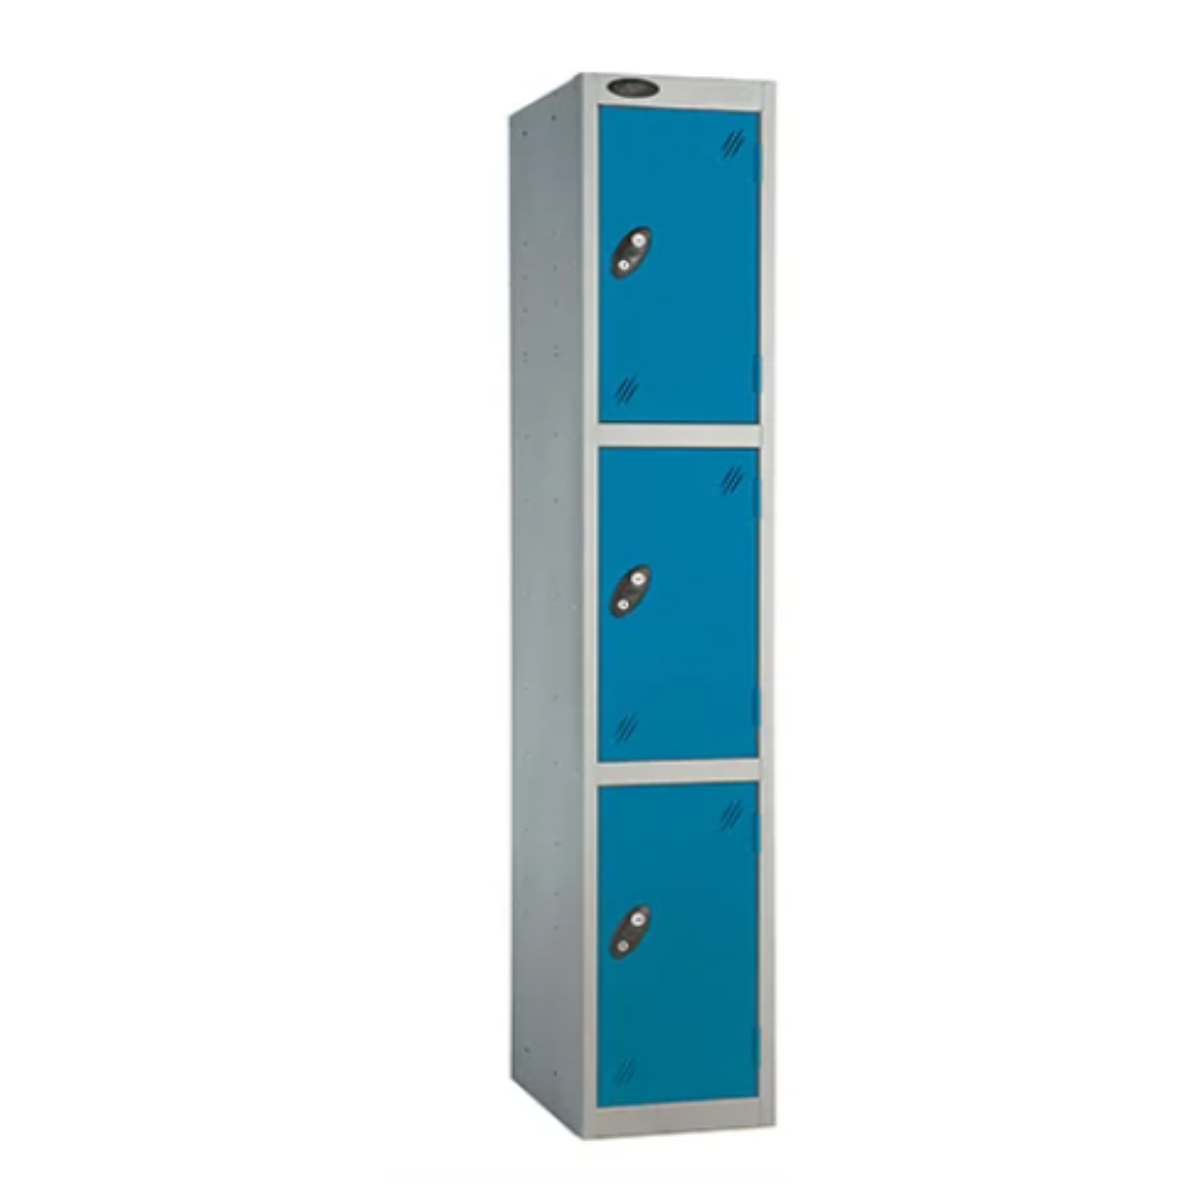 NEW Probe 3 door personal lockers cw keys 1780Hx305Wx460D BLUE and GREY